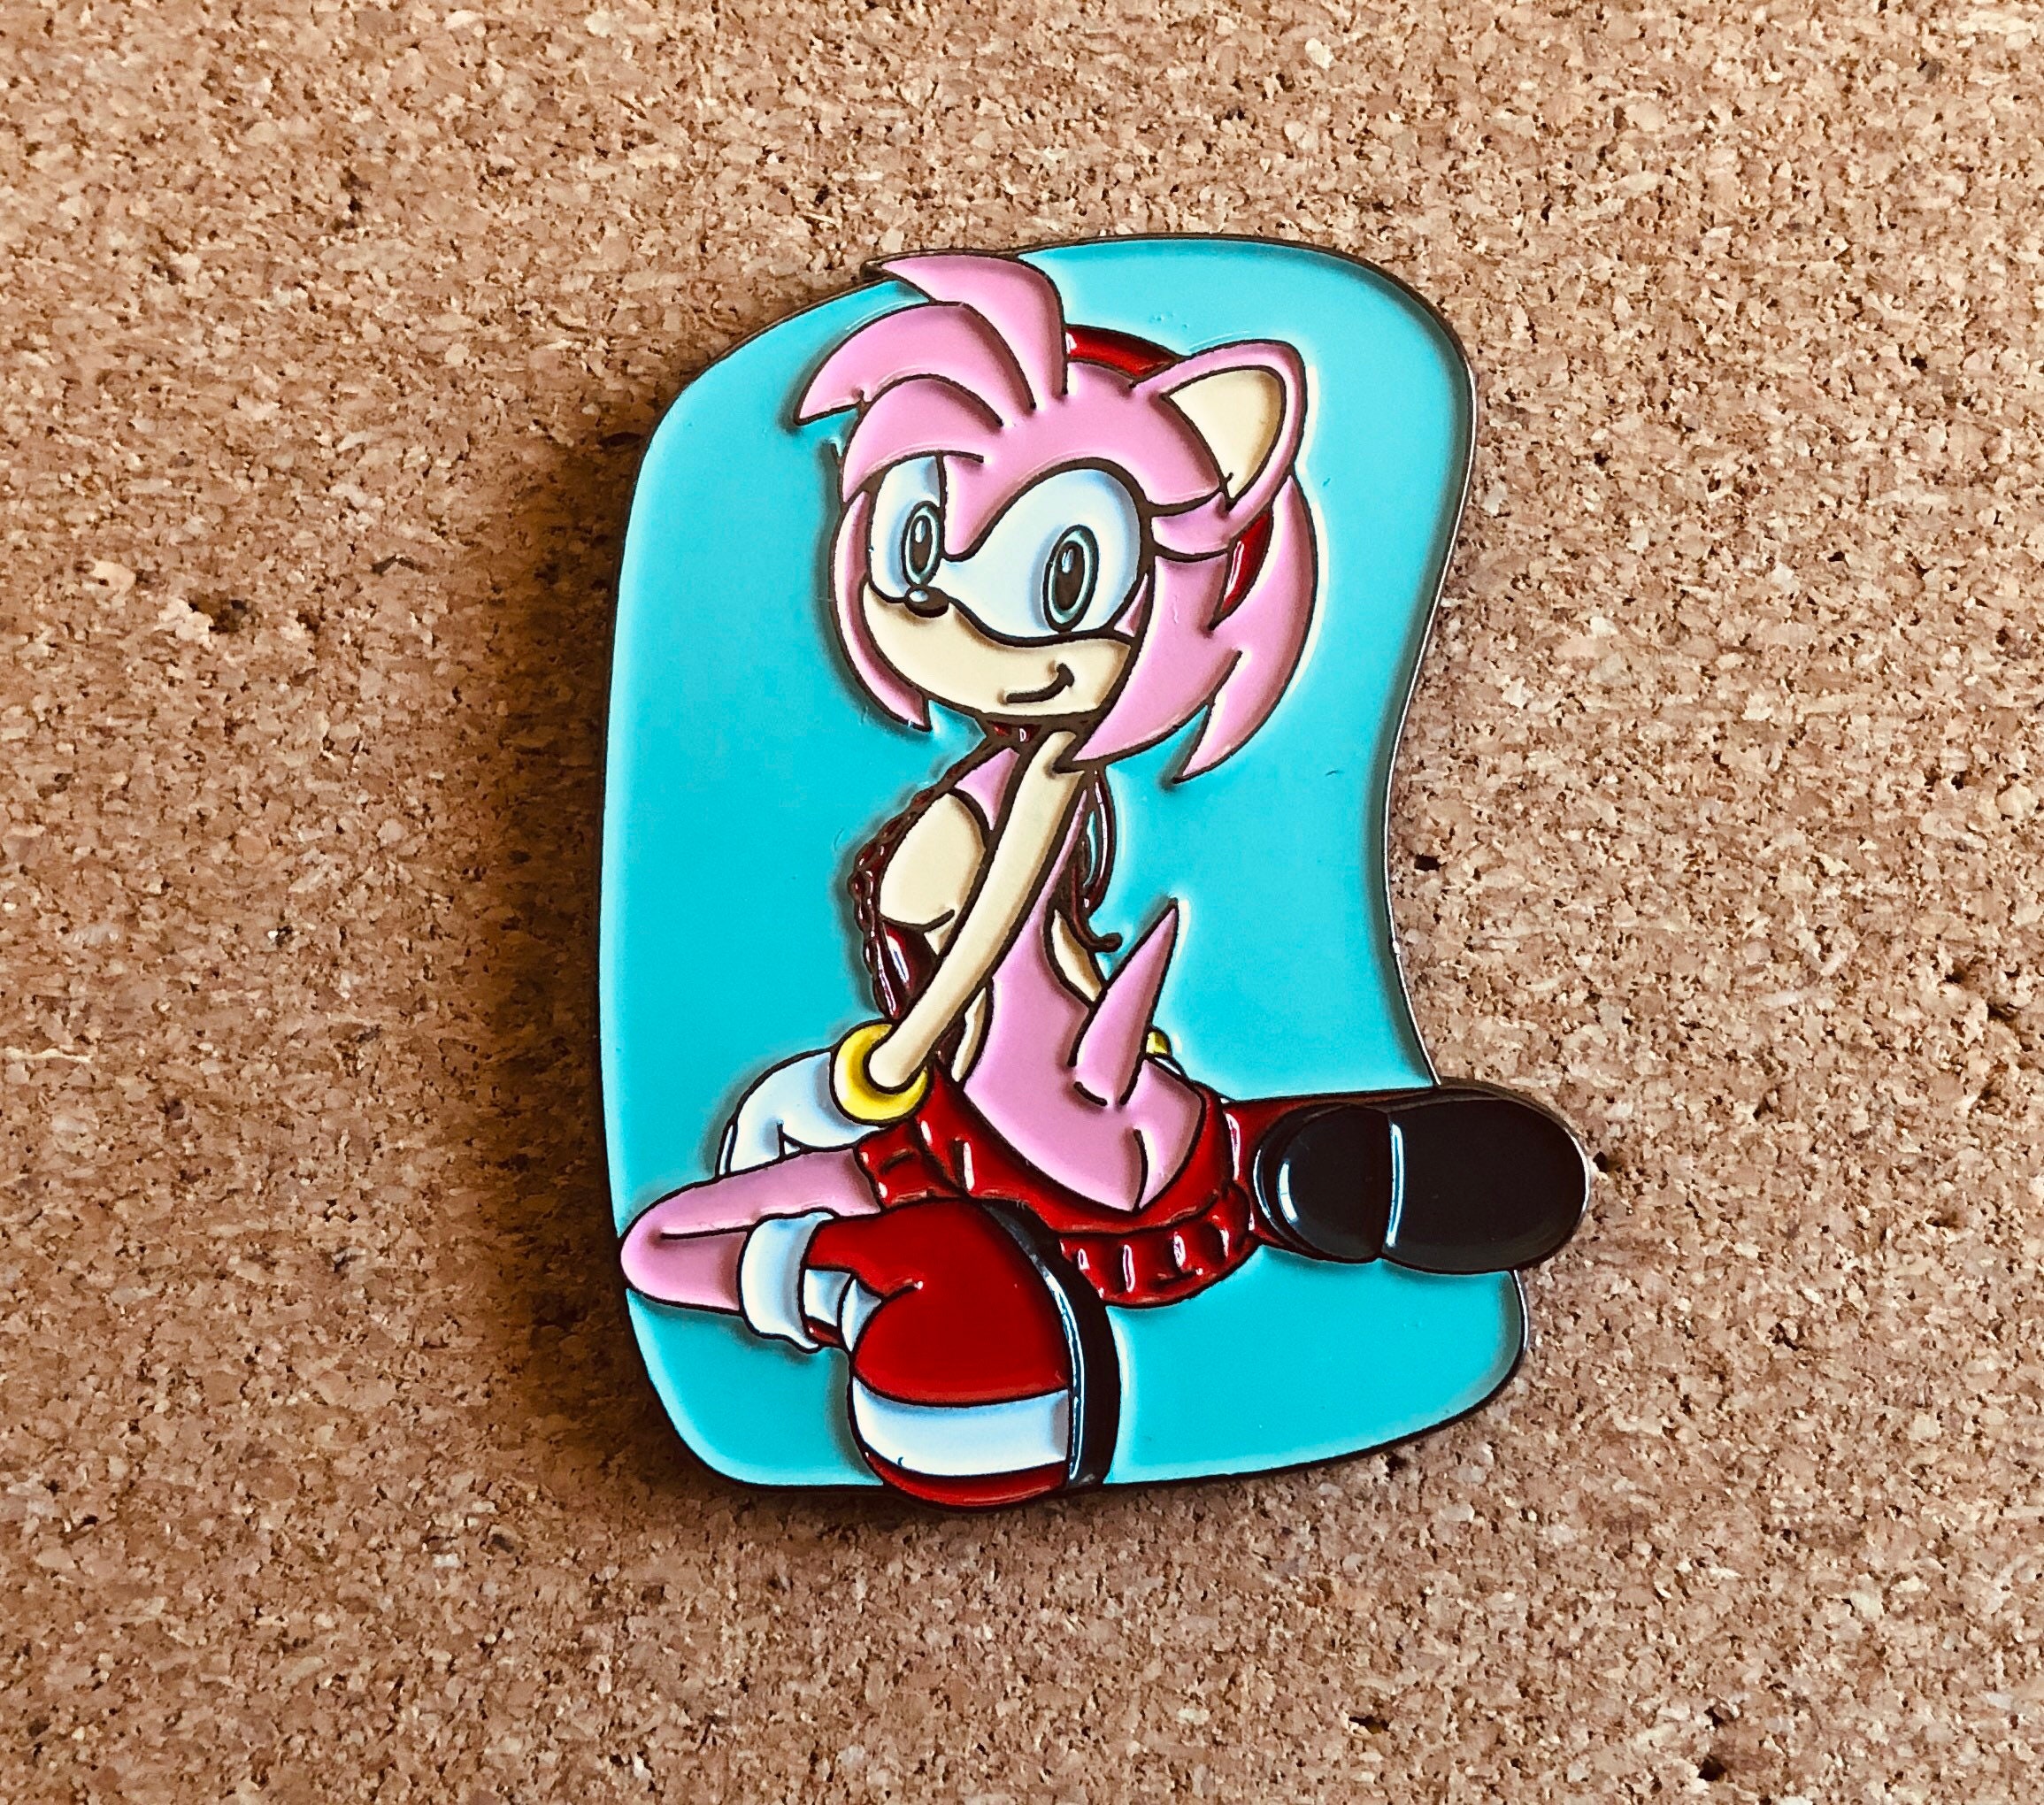 Sexy Video Game Hedgehog Girl Amy Rose Custom Made Pin Brooch pic